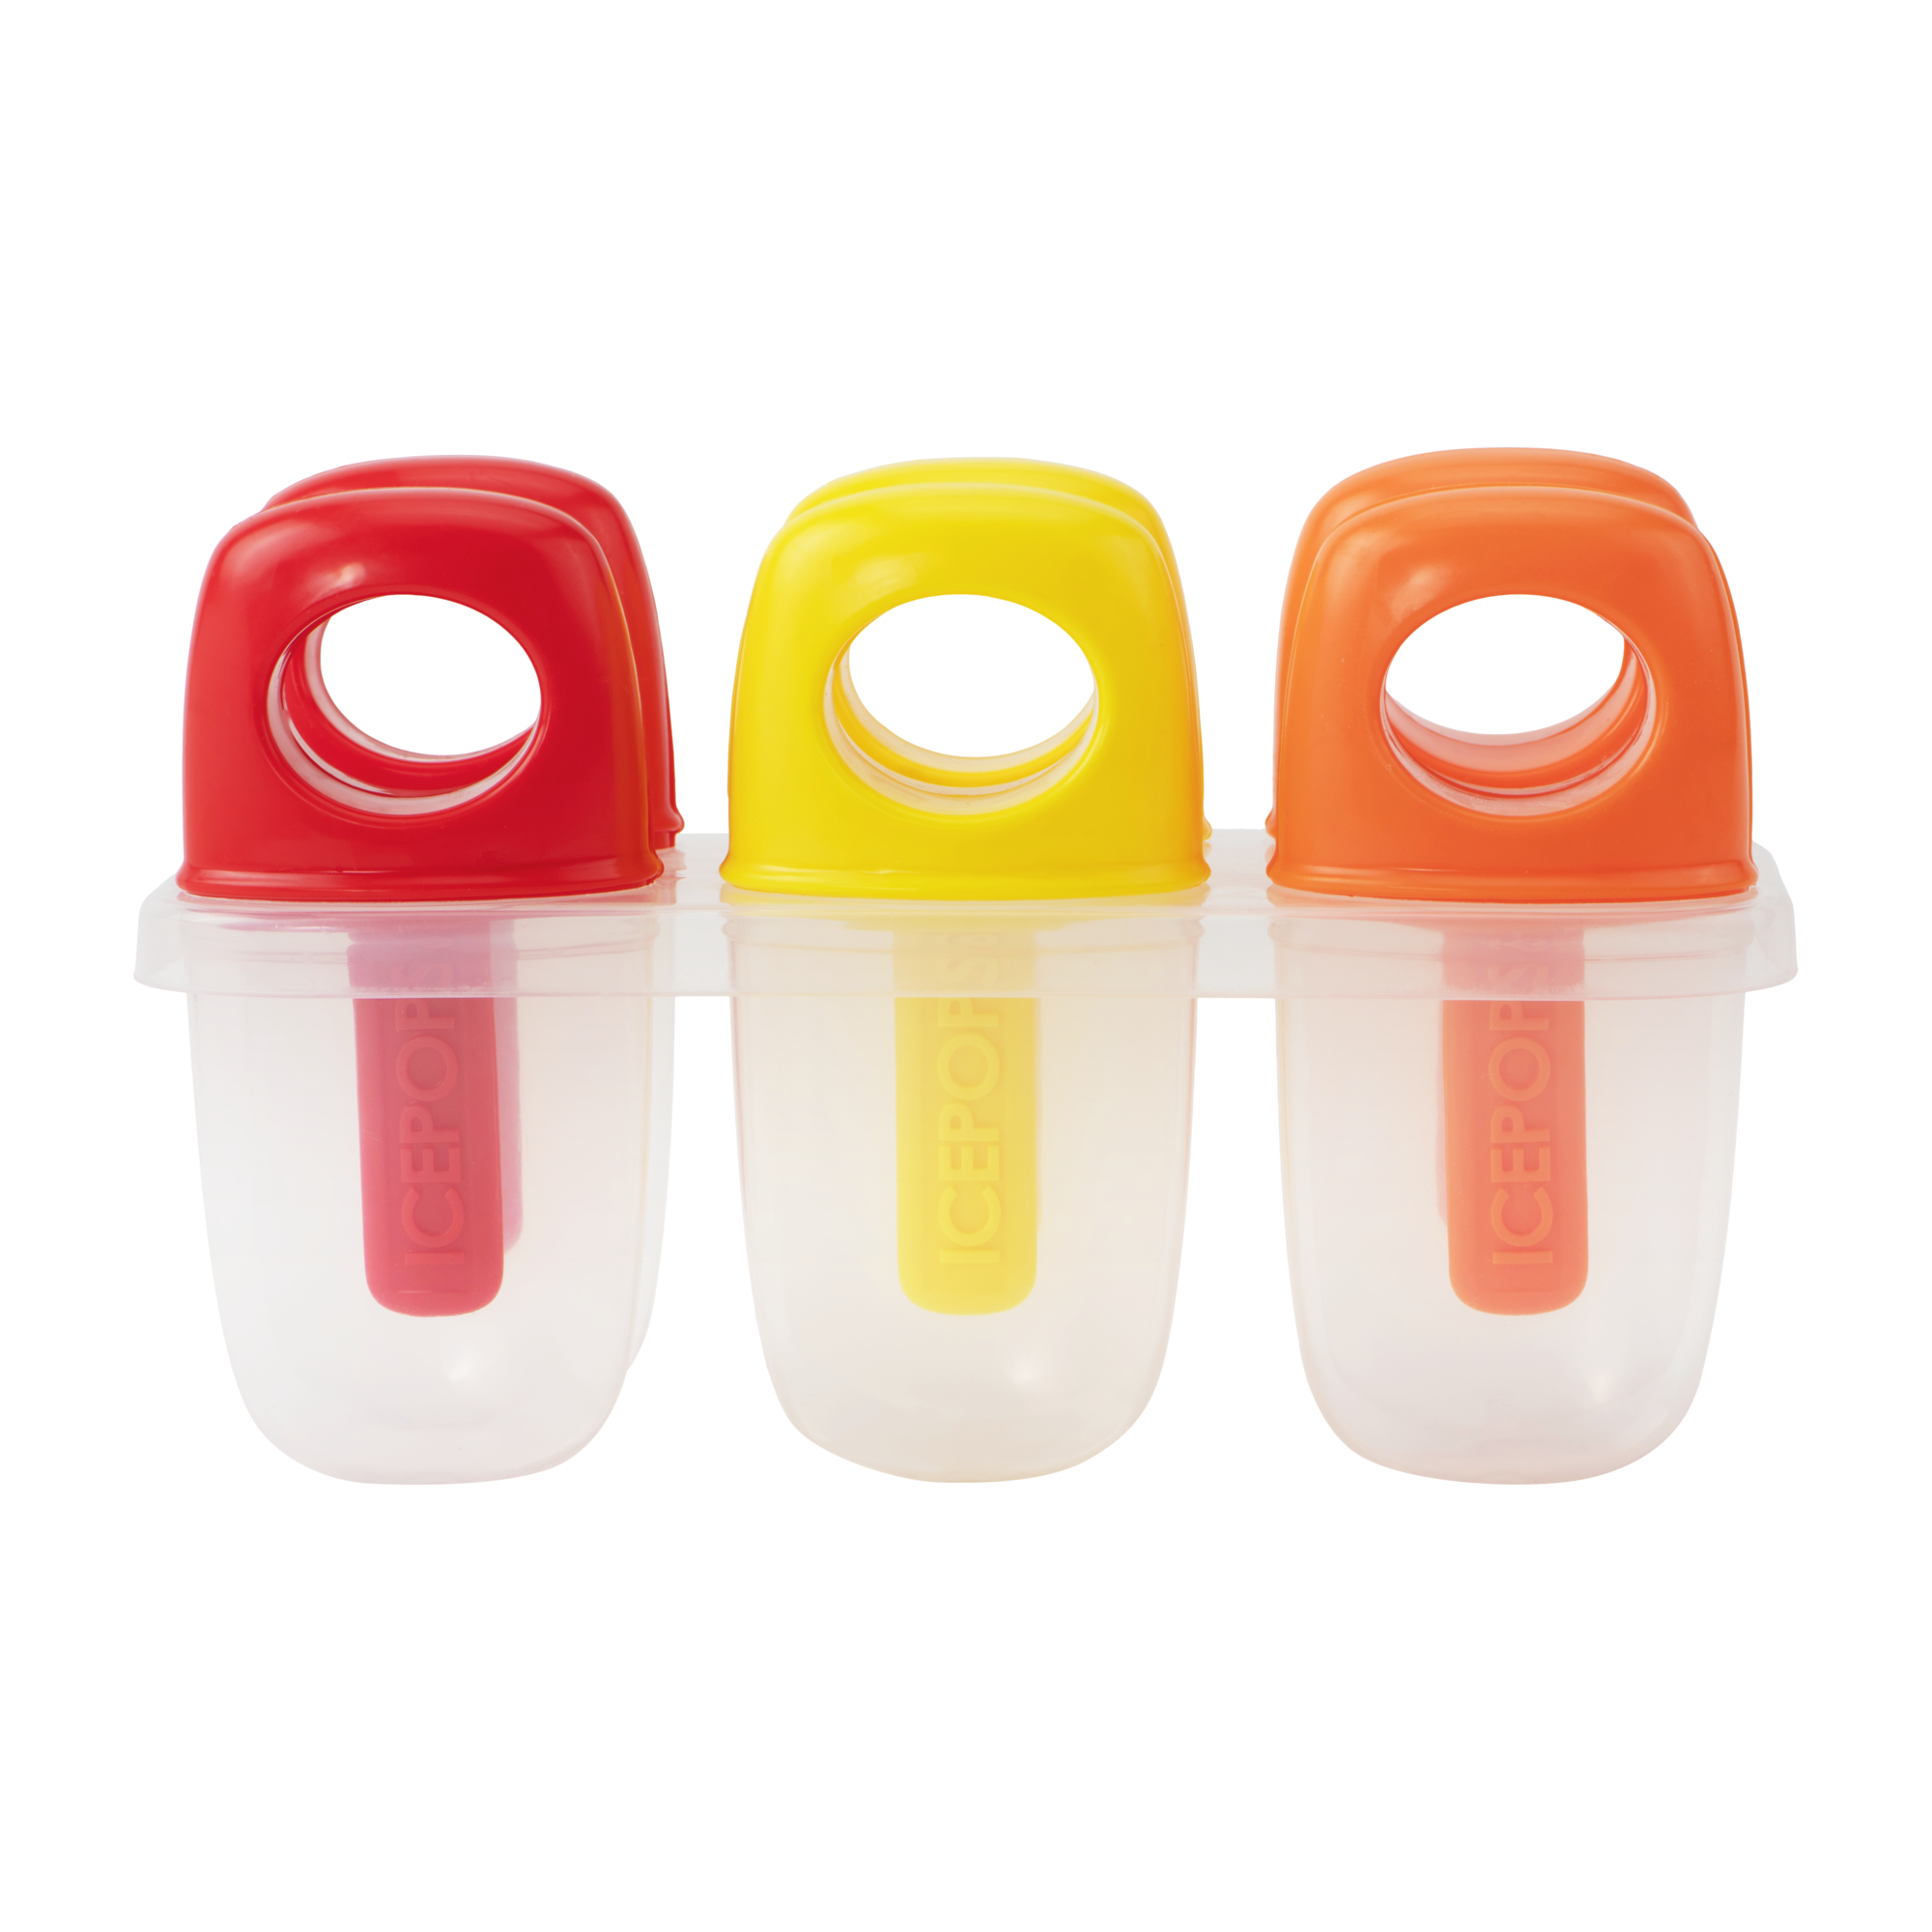 GoodCook PROfreshionals Ice Pop Maker Multi Color Plastic - image 3 of 4